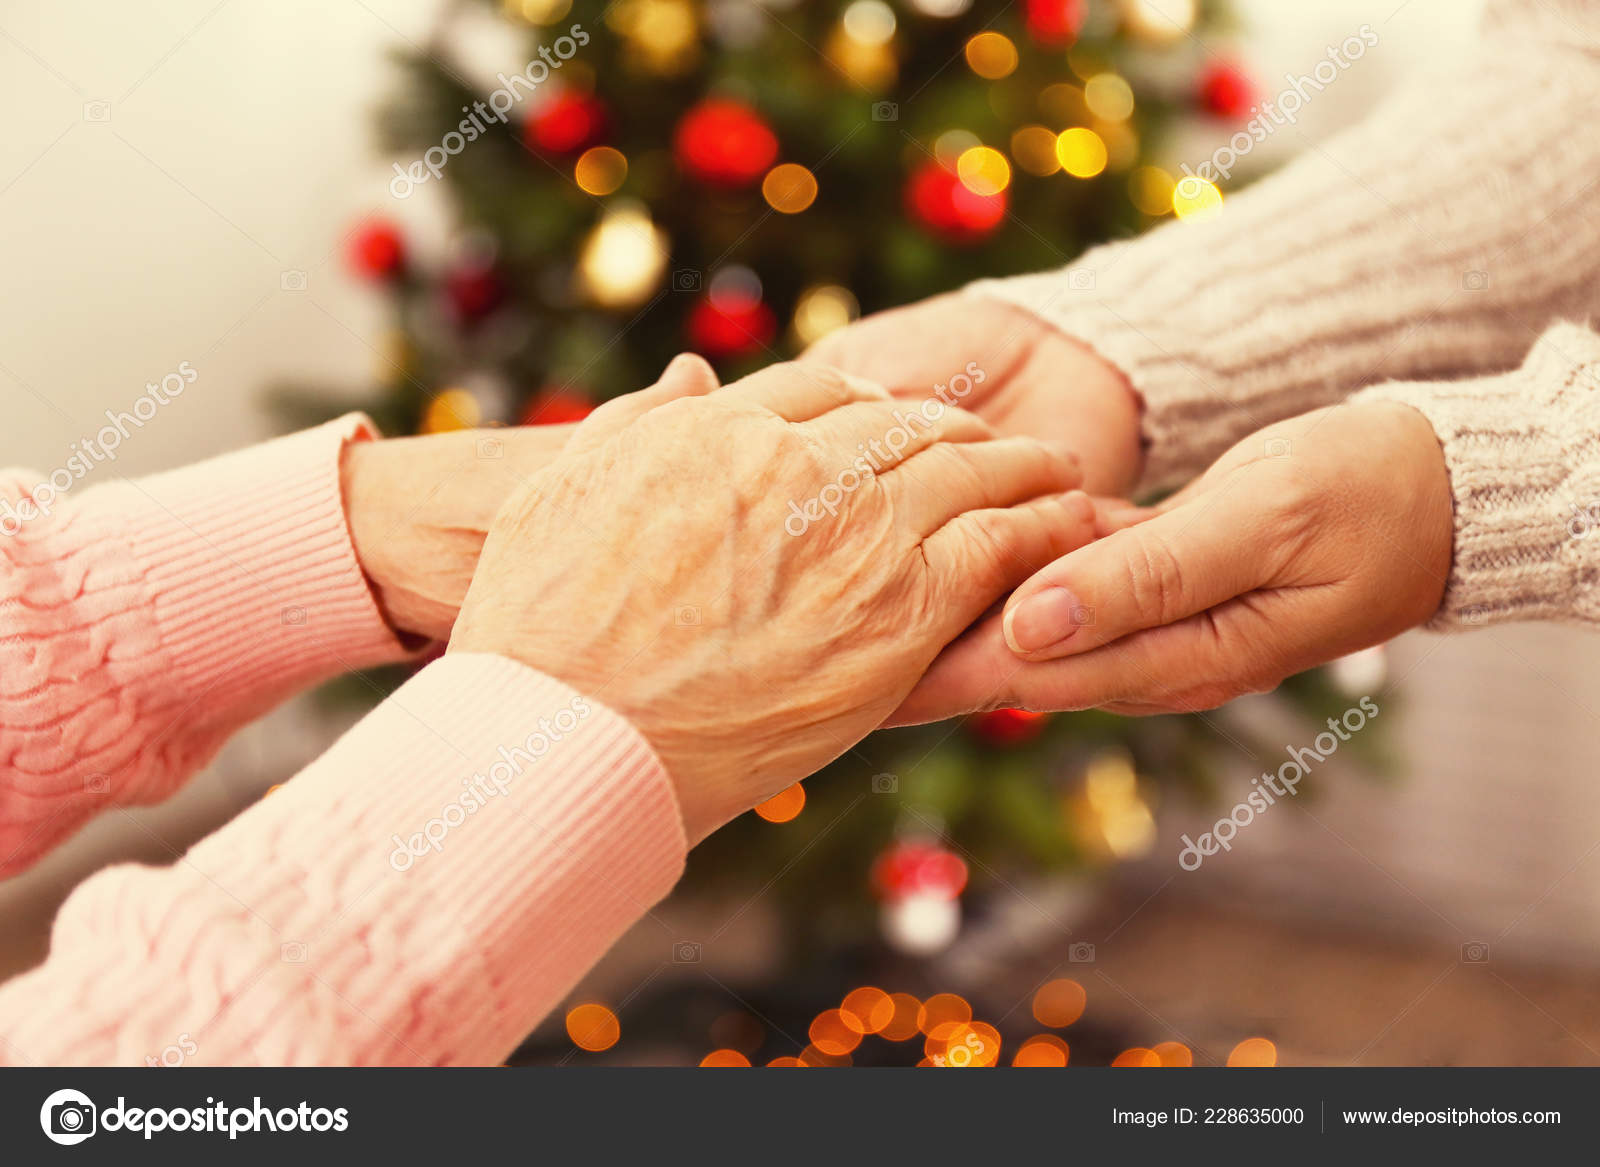 https://st4.depositphotos.com/14521116/22863/i/1600/depositphotos_228635000-stock-photo-elderly-woman-celebrating-christmas-home.jpg